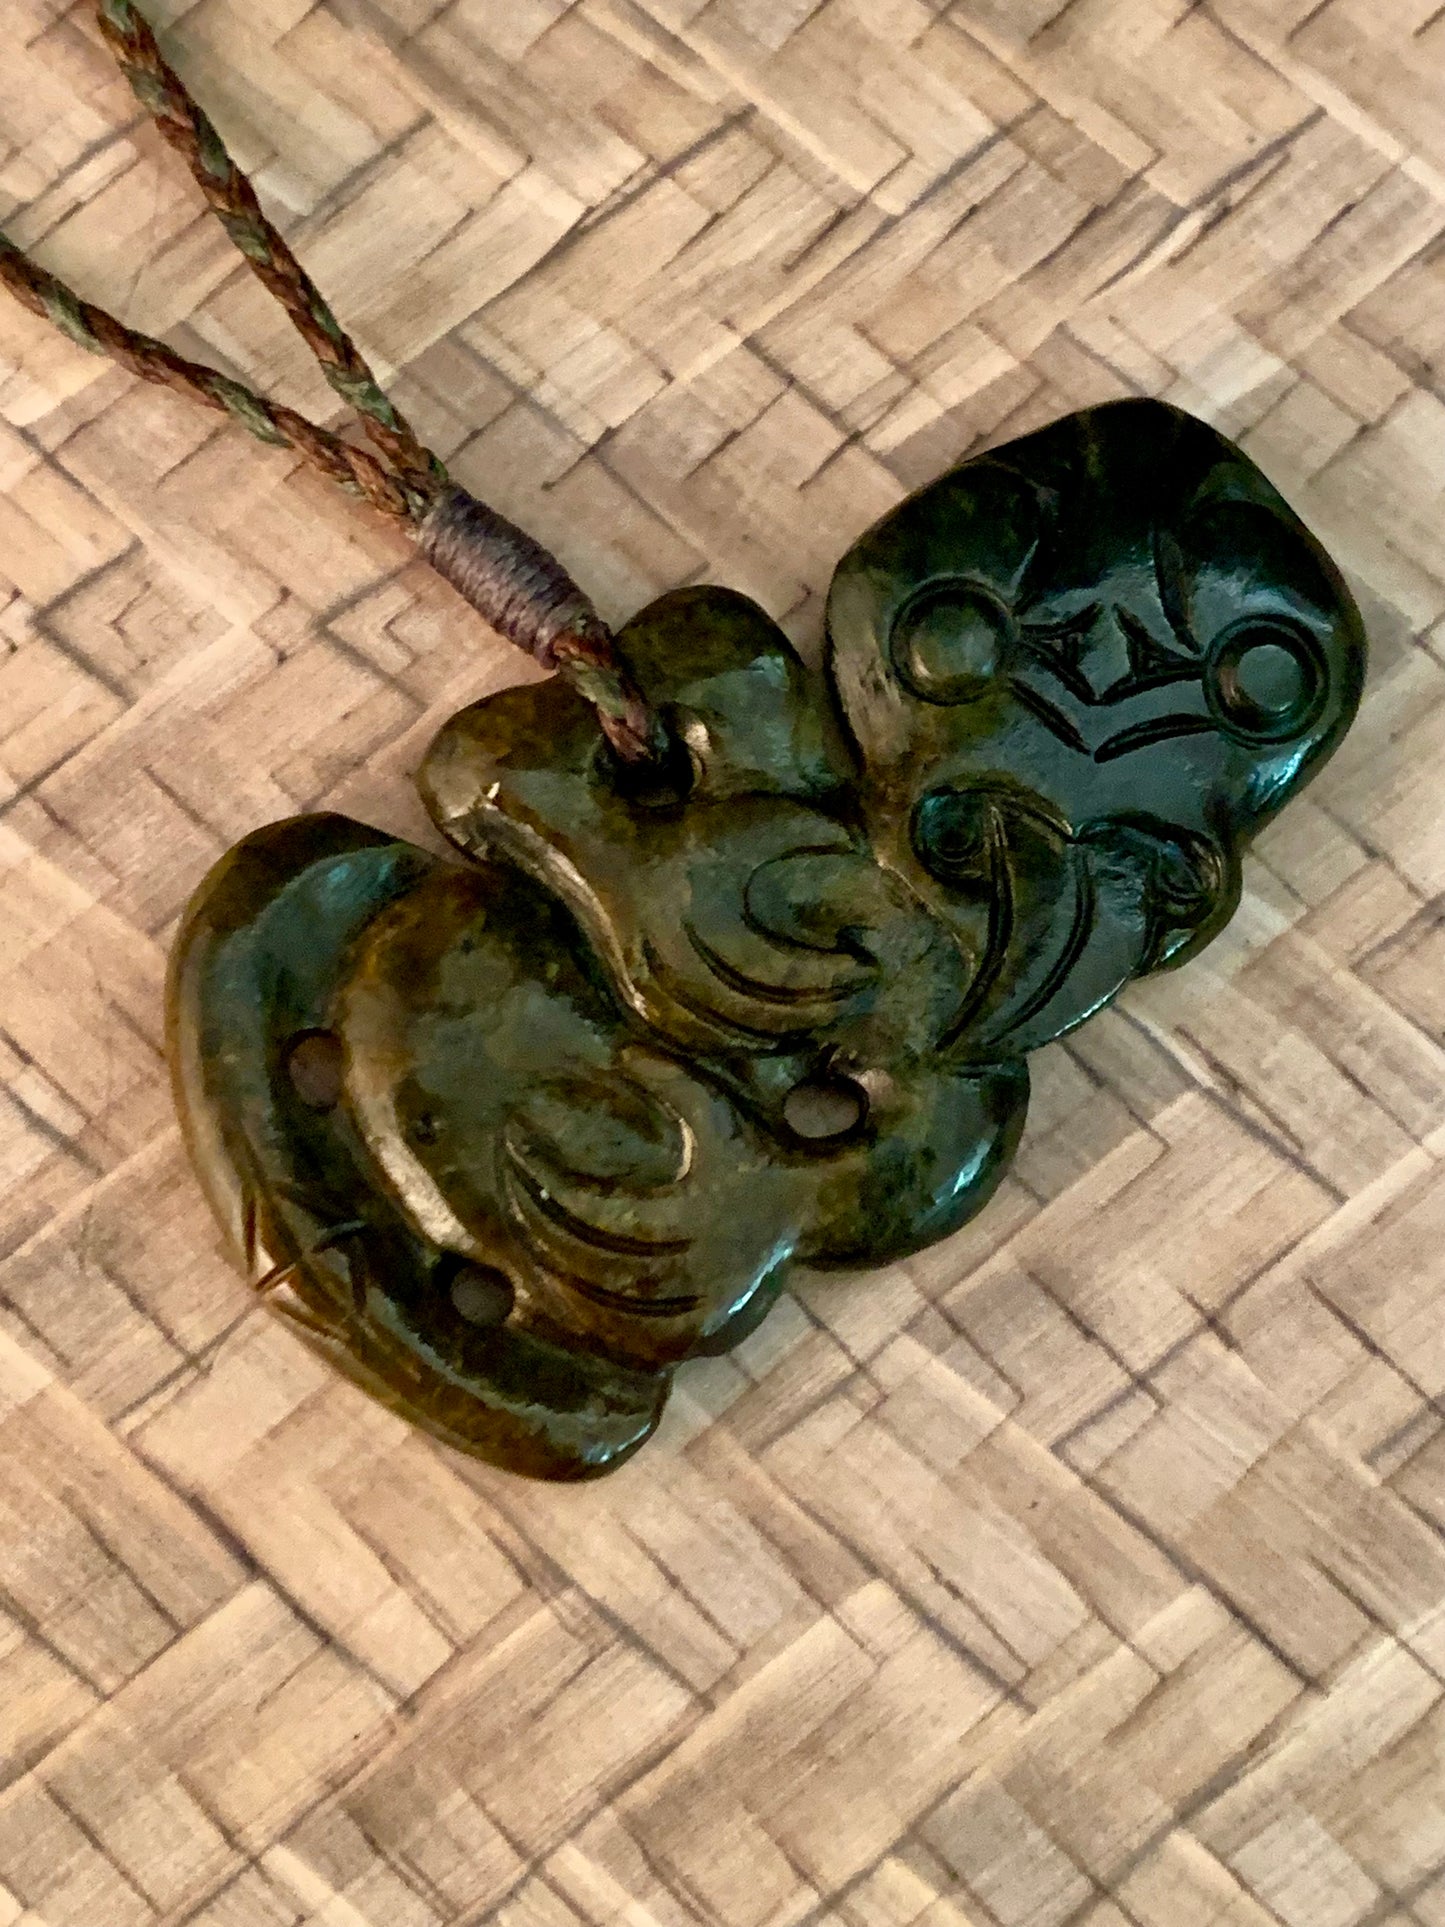 Maori tiki pendant from New Zealand.  Regarded as a fertility symbol or good luck symbol.